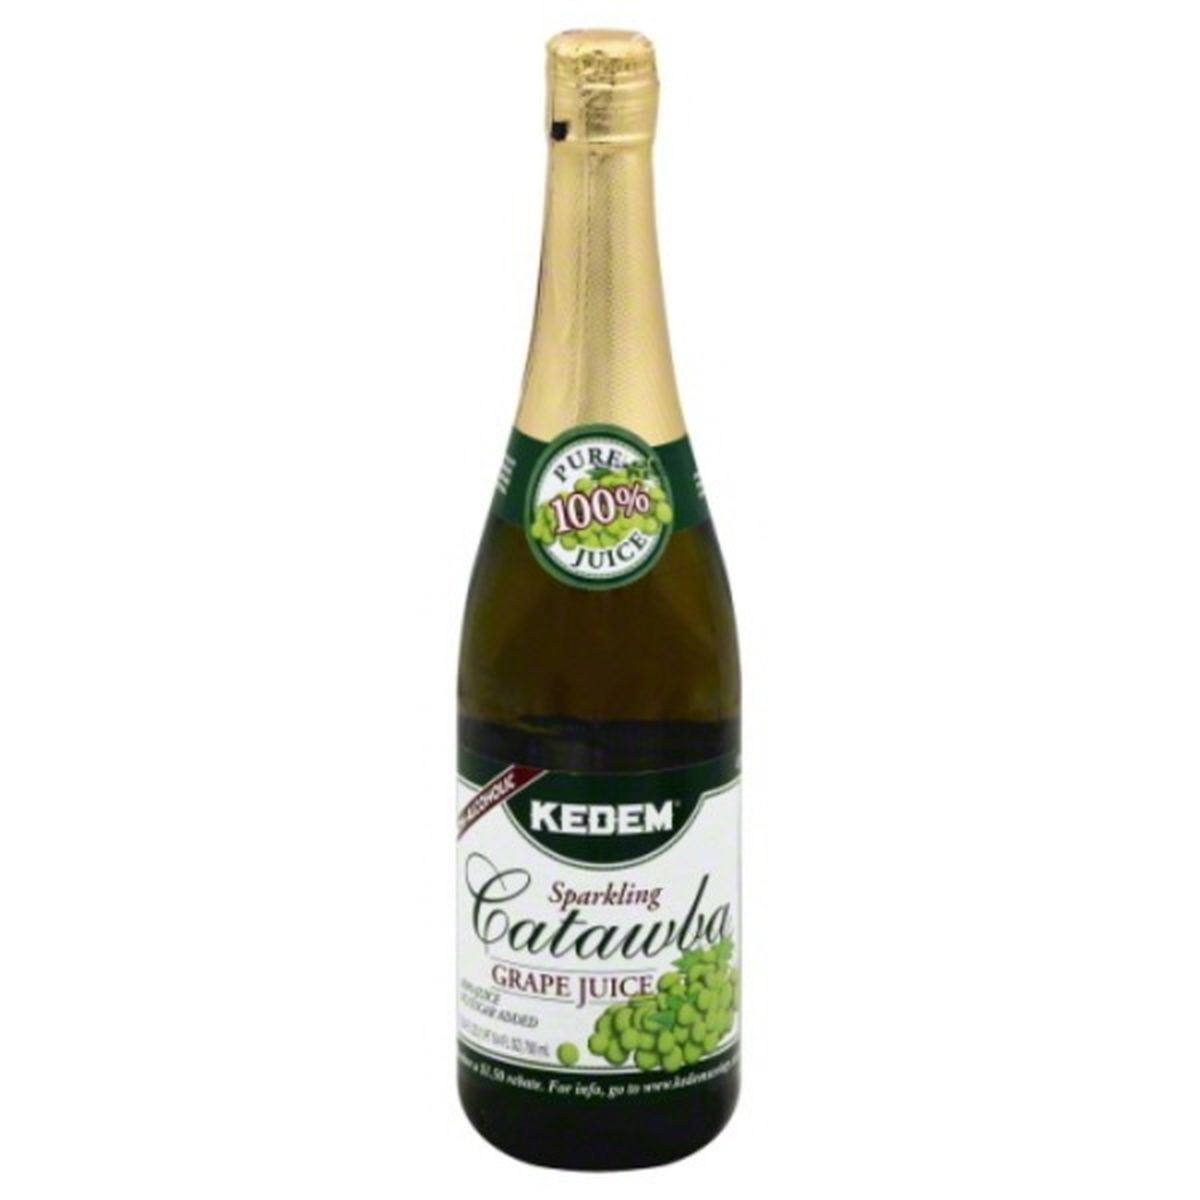 Calories in Kedem 100% Juice, Sparkling, Catawba Grape Juice